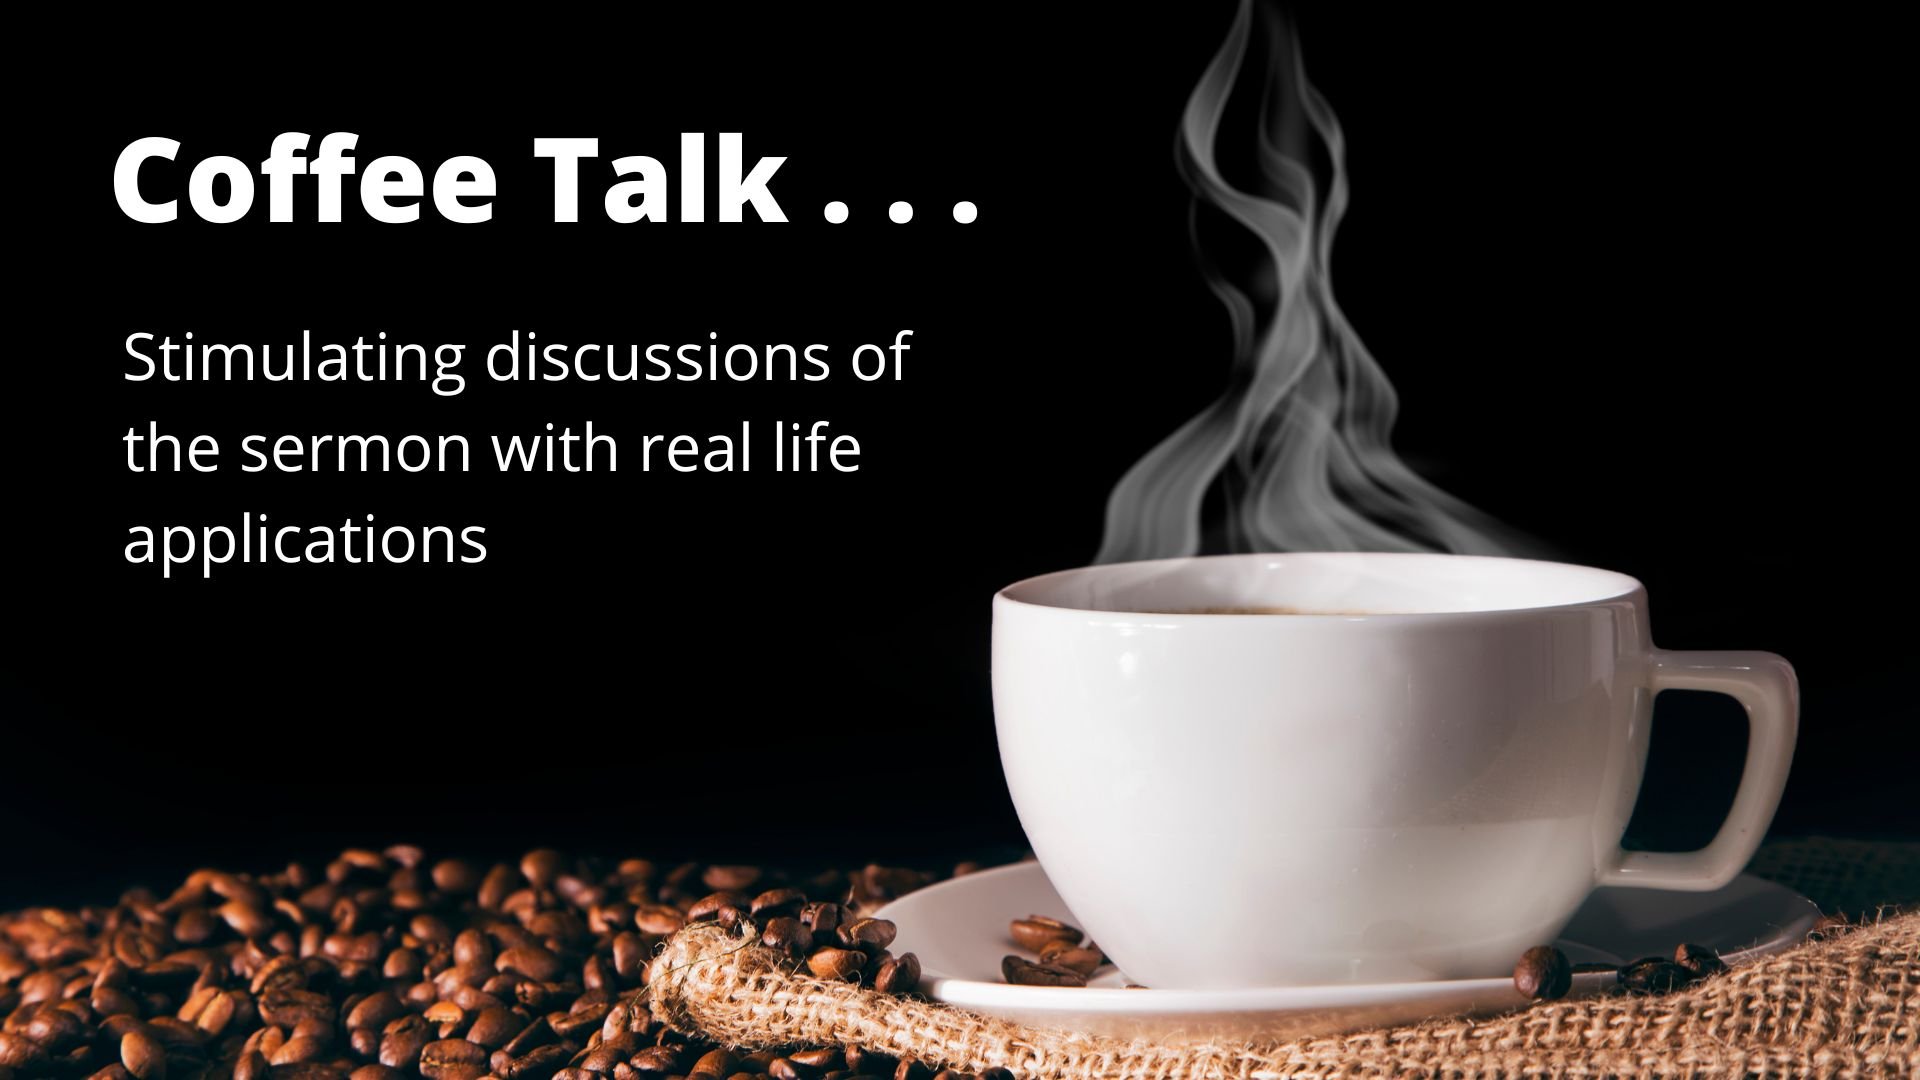 Coffee talk title graphic.jpg